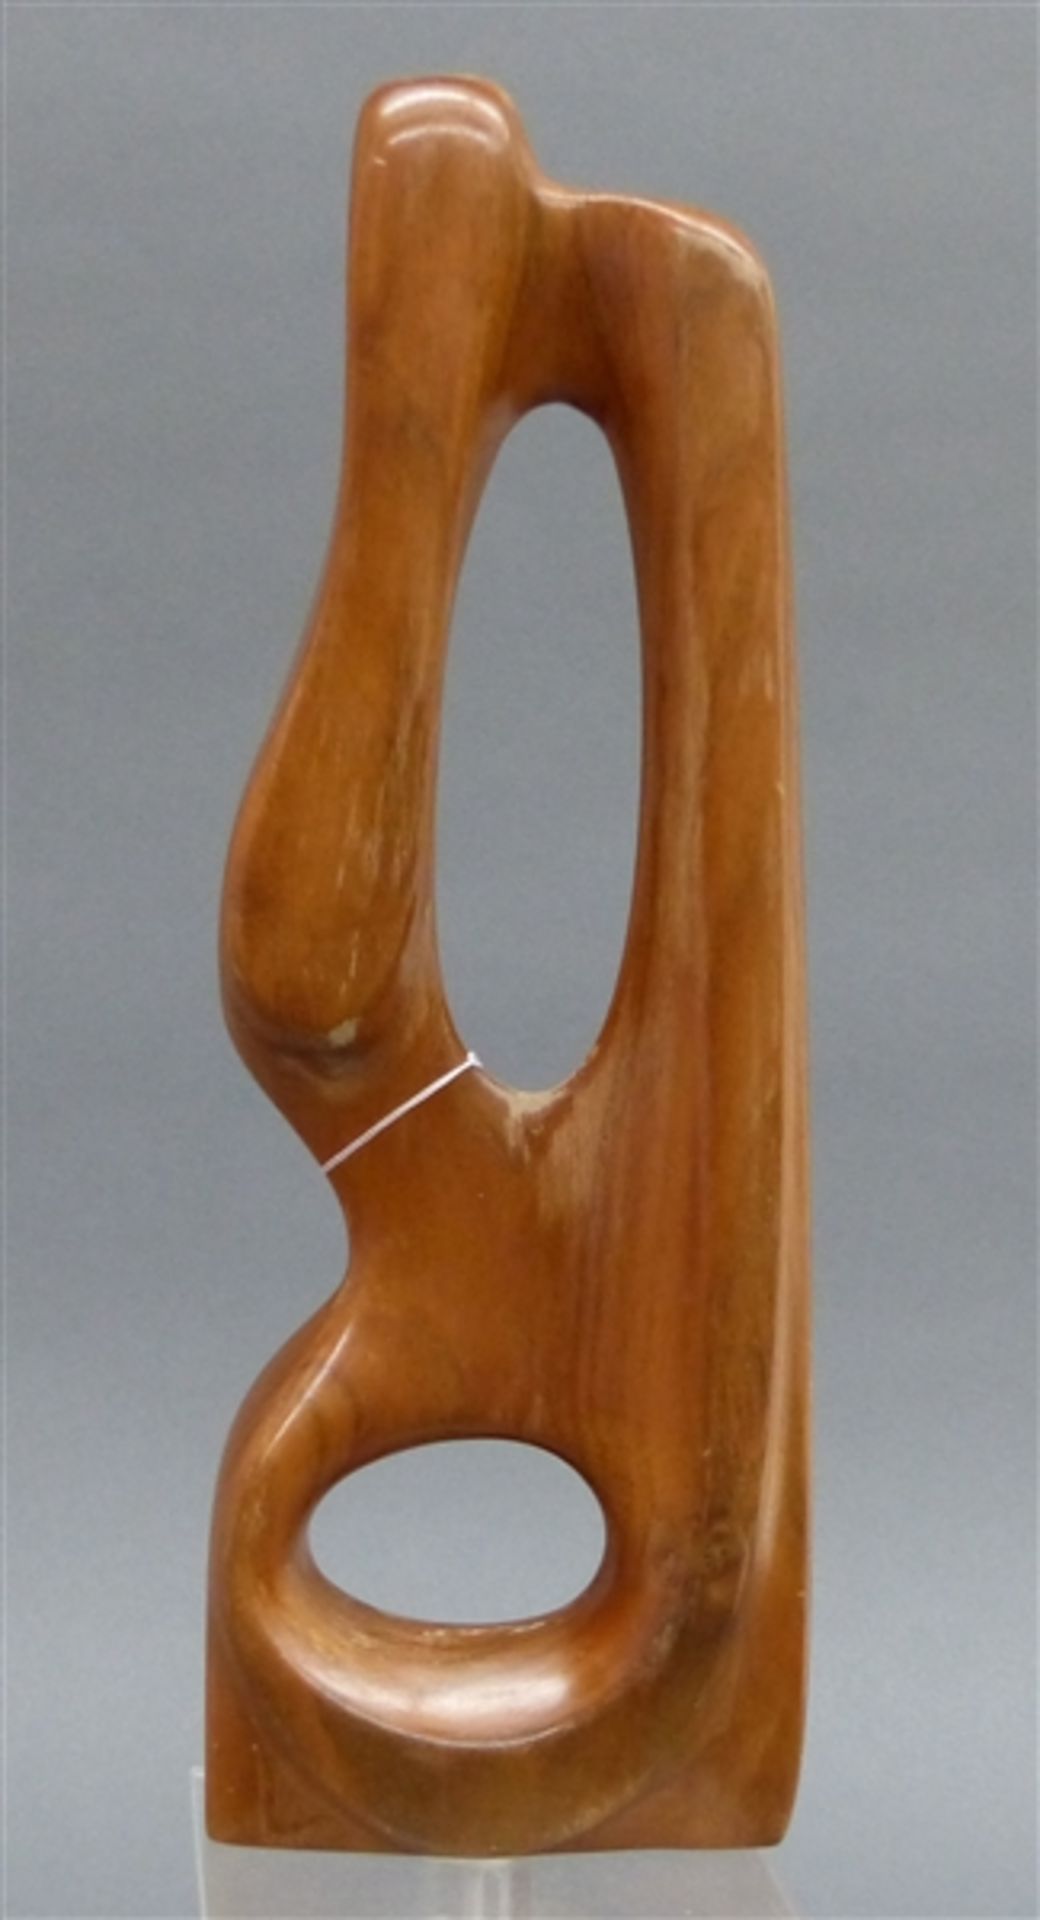 Holzskulptur Teakholz, moderne Form, signiert Böh und datiert (19)77, h 31 cm,